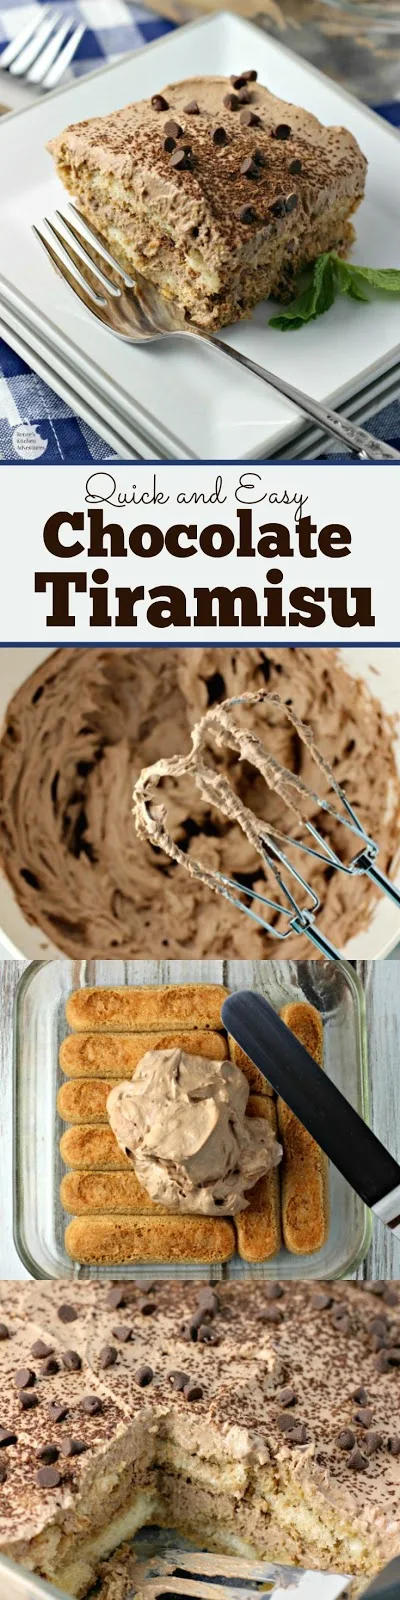 Chocolate Tiramisu | by Renee's Kitchen Adventures - quick and easy dessert recipe for chocolate flavored tiramisu #SundaySupper #RKArecipes